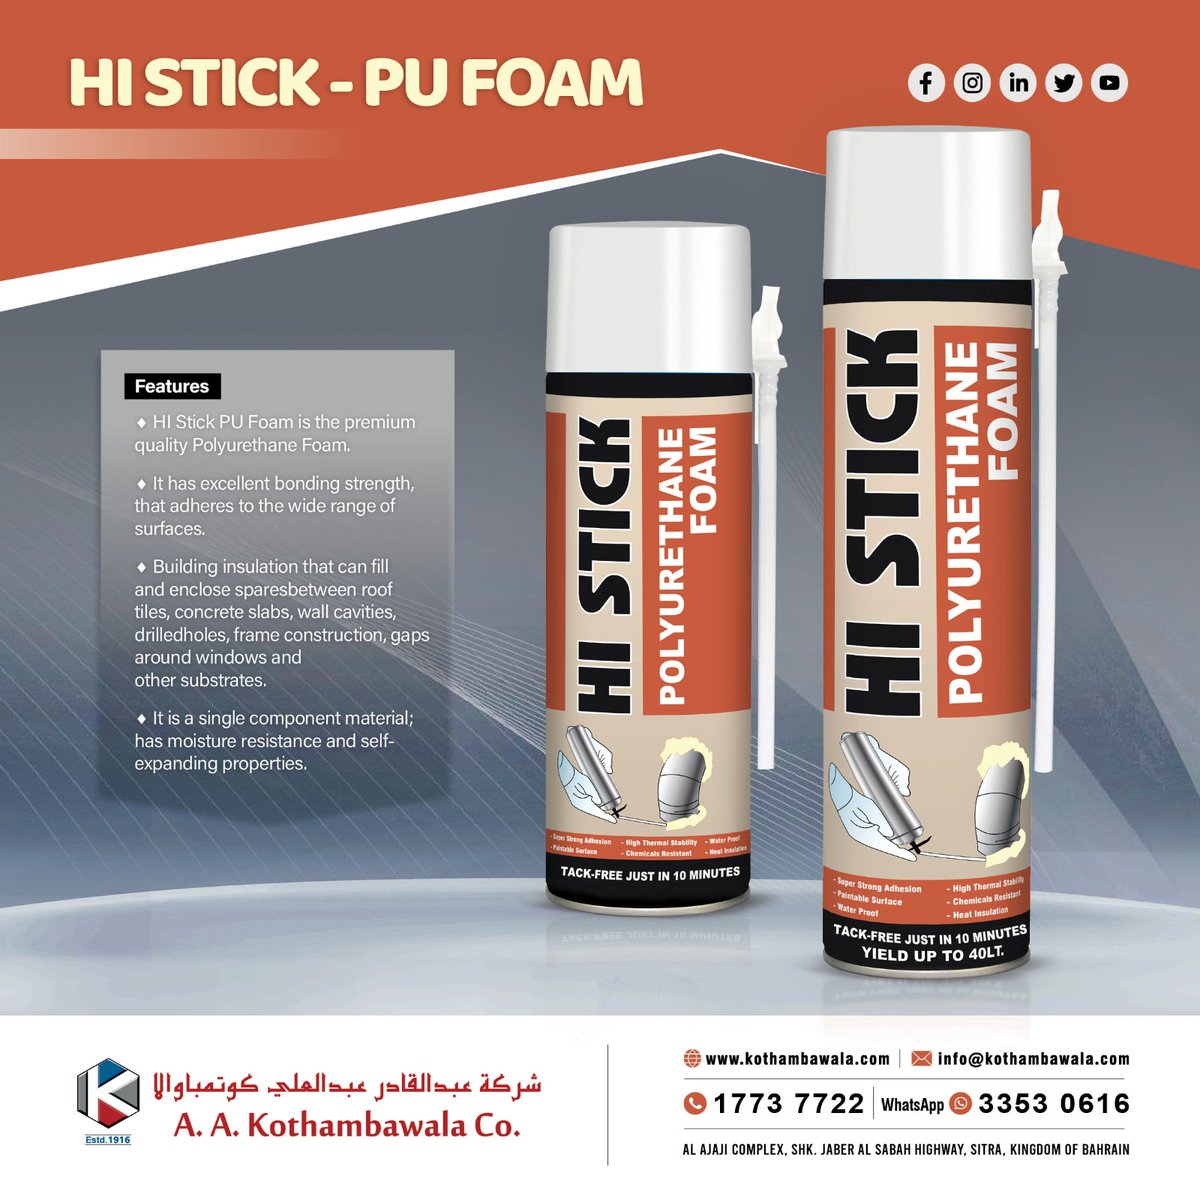 HI STICK - PU FOAM

Available with A.A. Kothambawala Co.

#histick #pufoam #polyurethane #foam #quality #insulation #moistureresistant #aakothambawala #sitra #bahrain